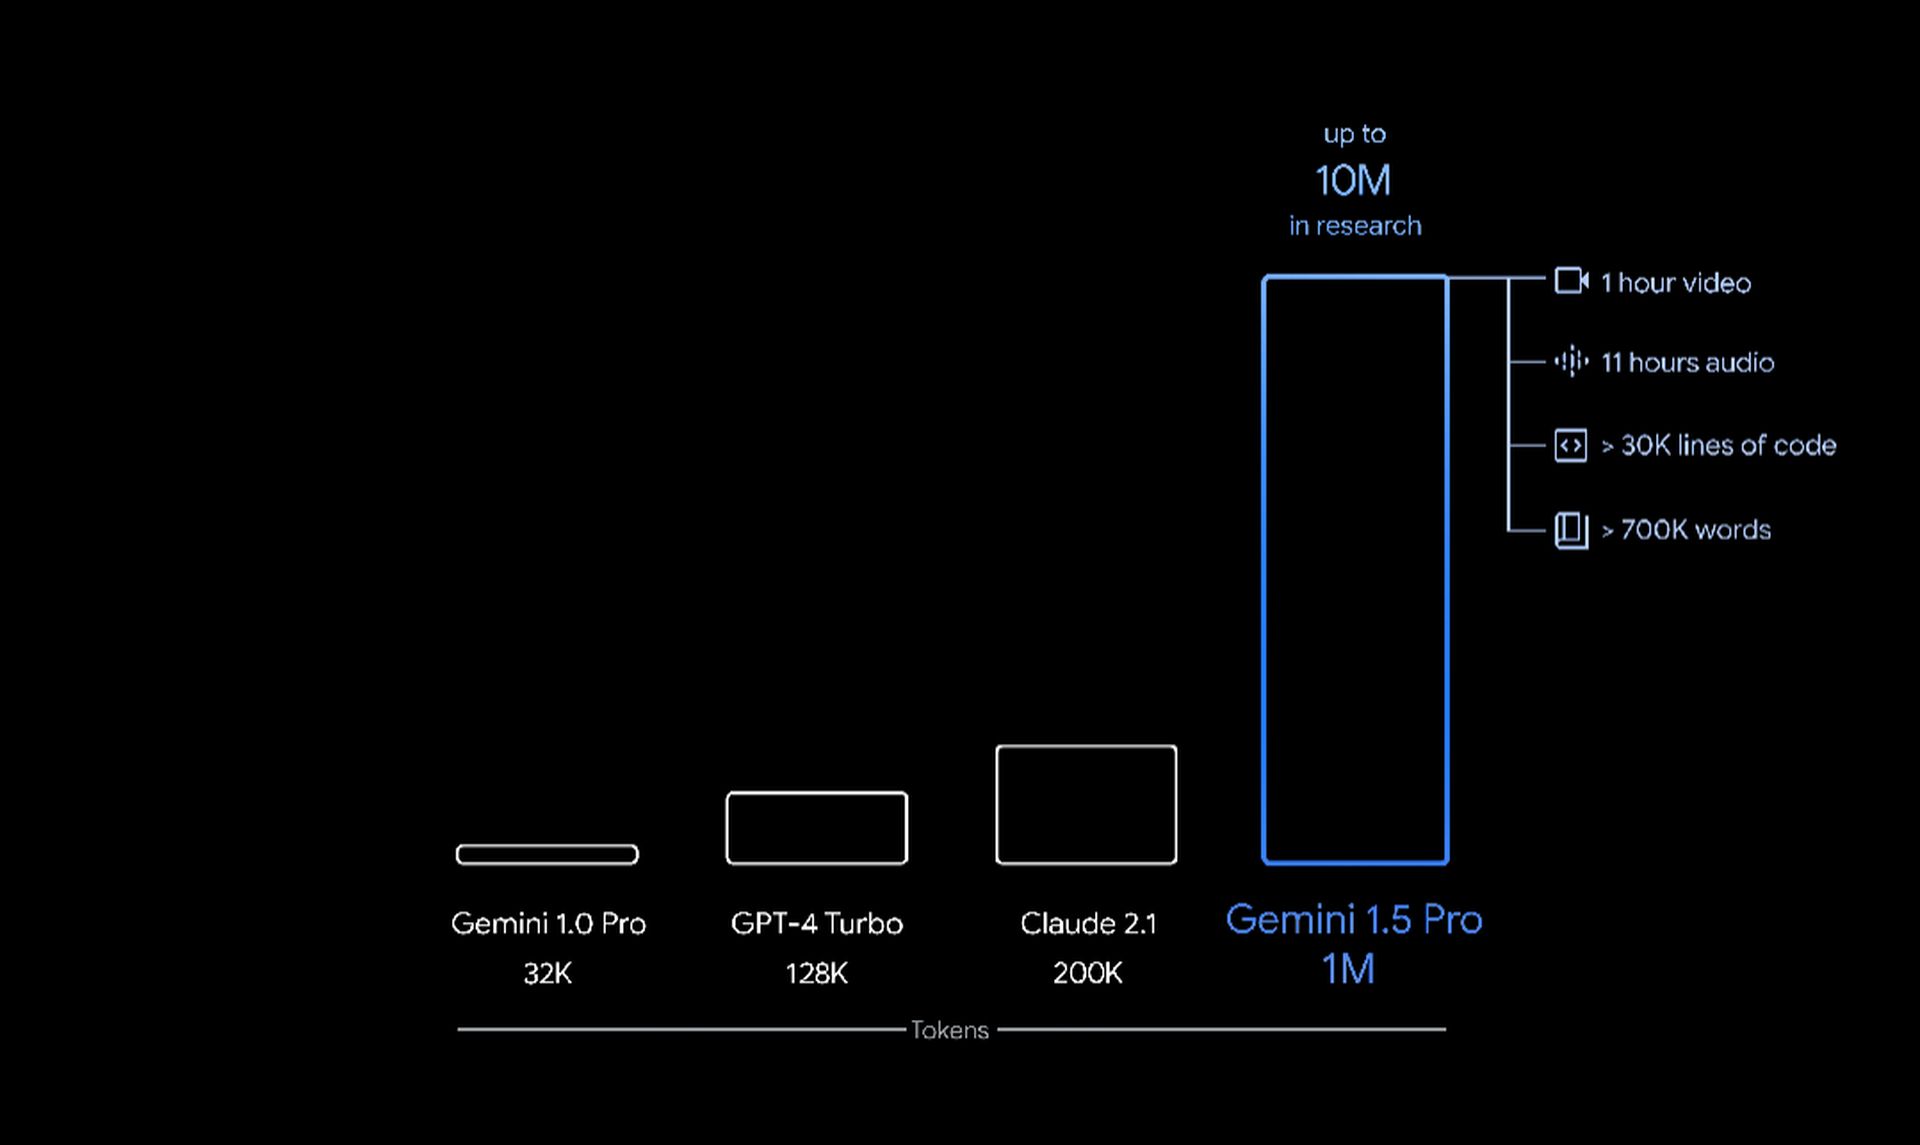 What is Google Gemini 1.5 Pro?